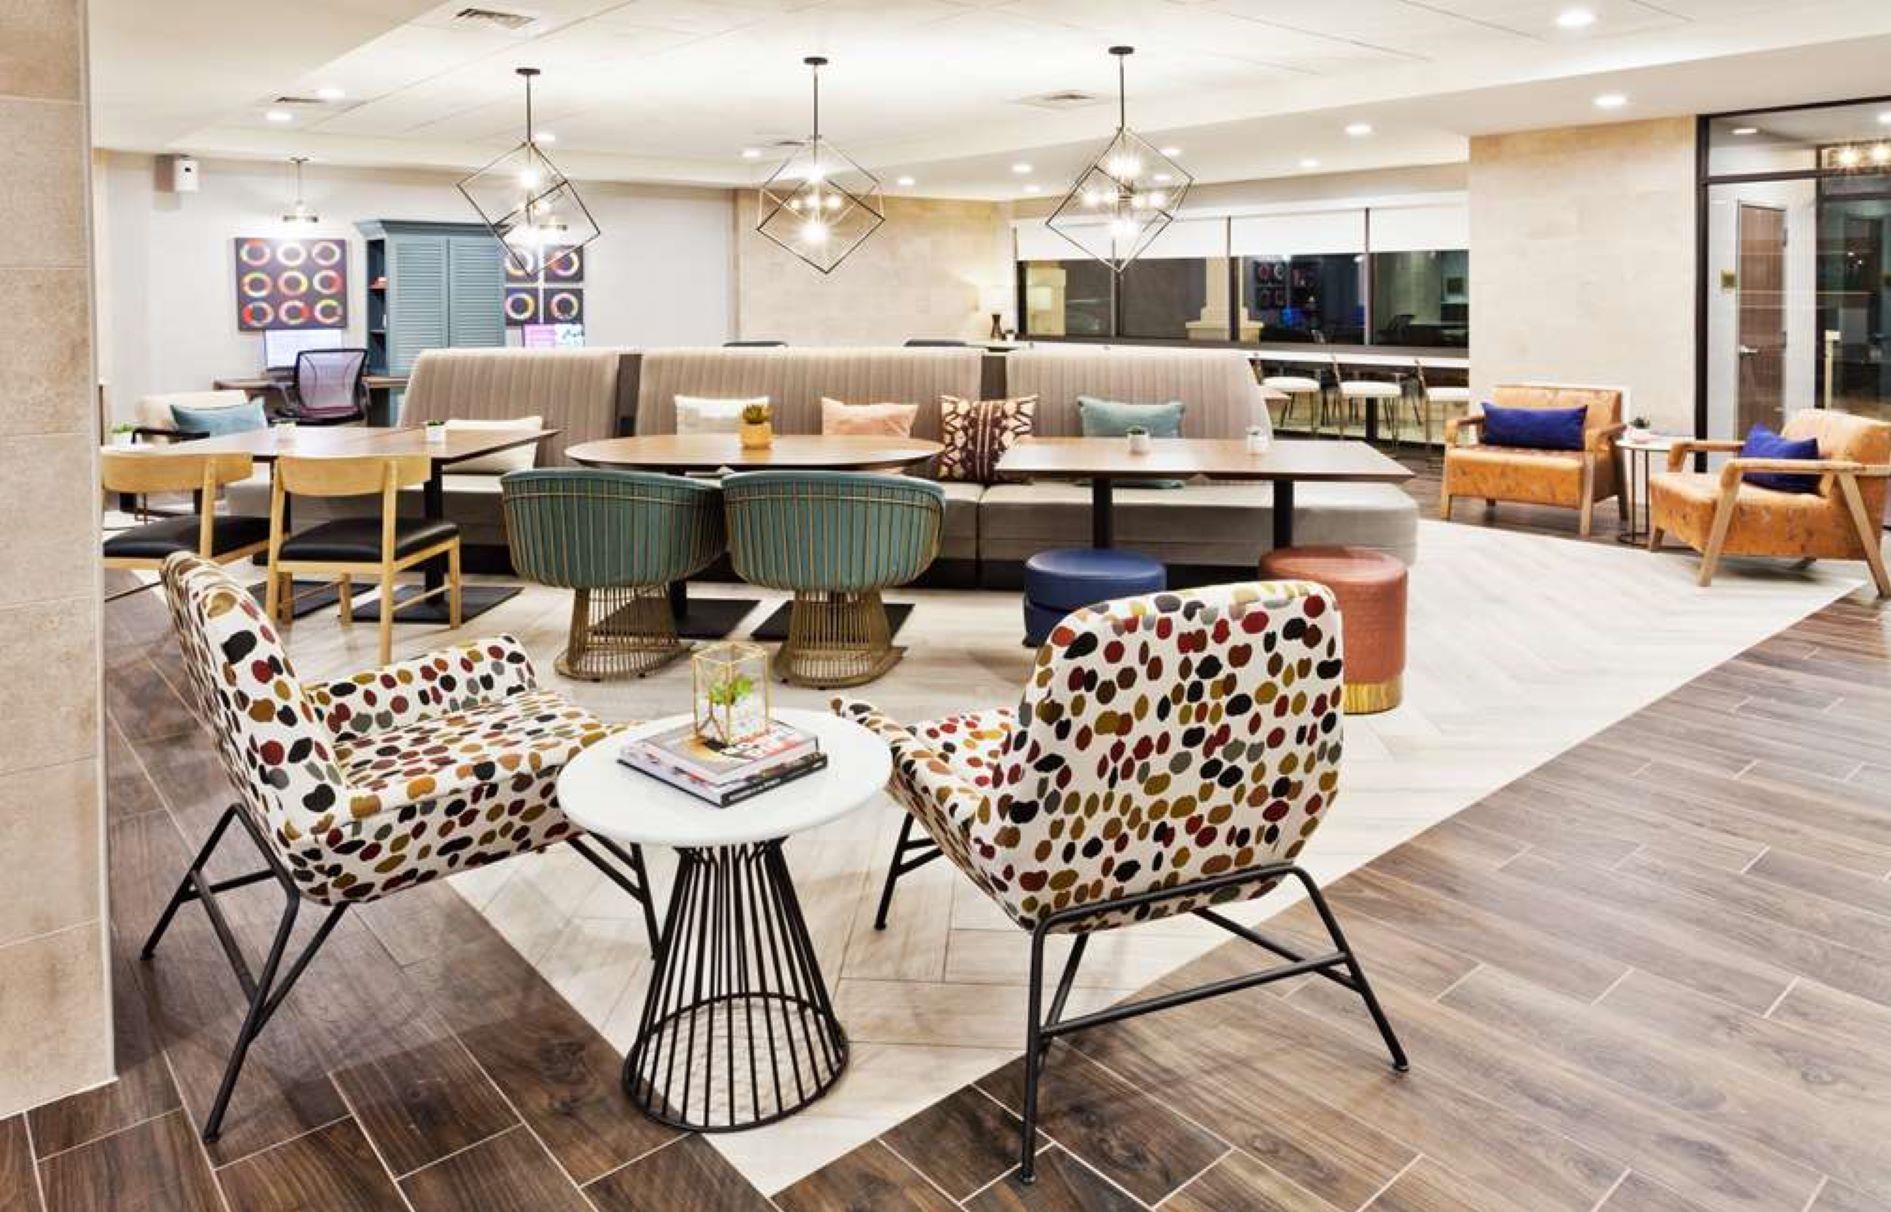 Home2 Suites by Hilton Alpharetta in Alpharetta, GA